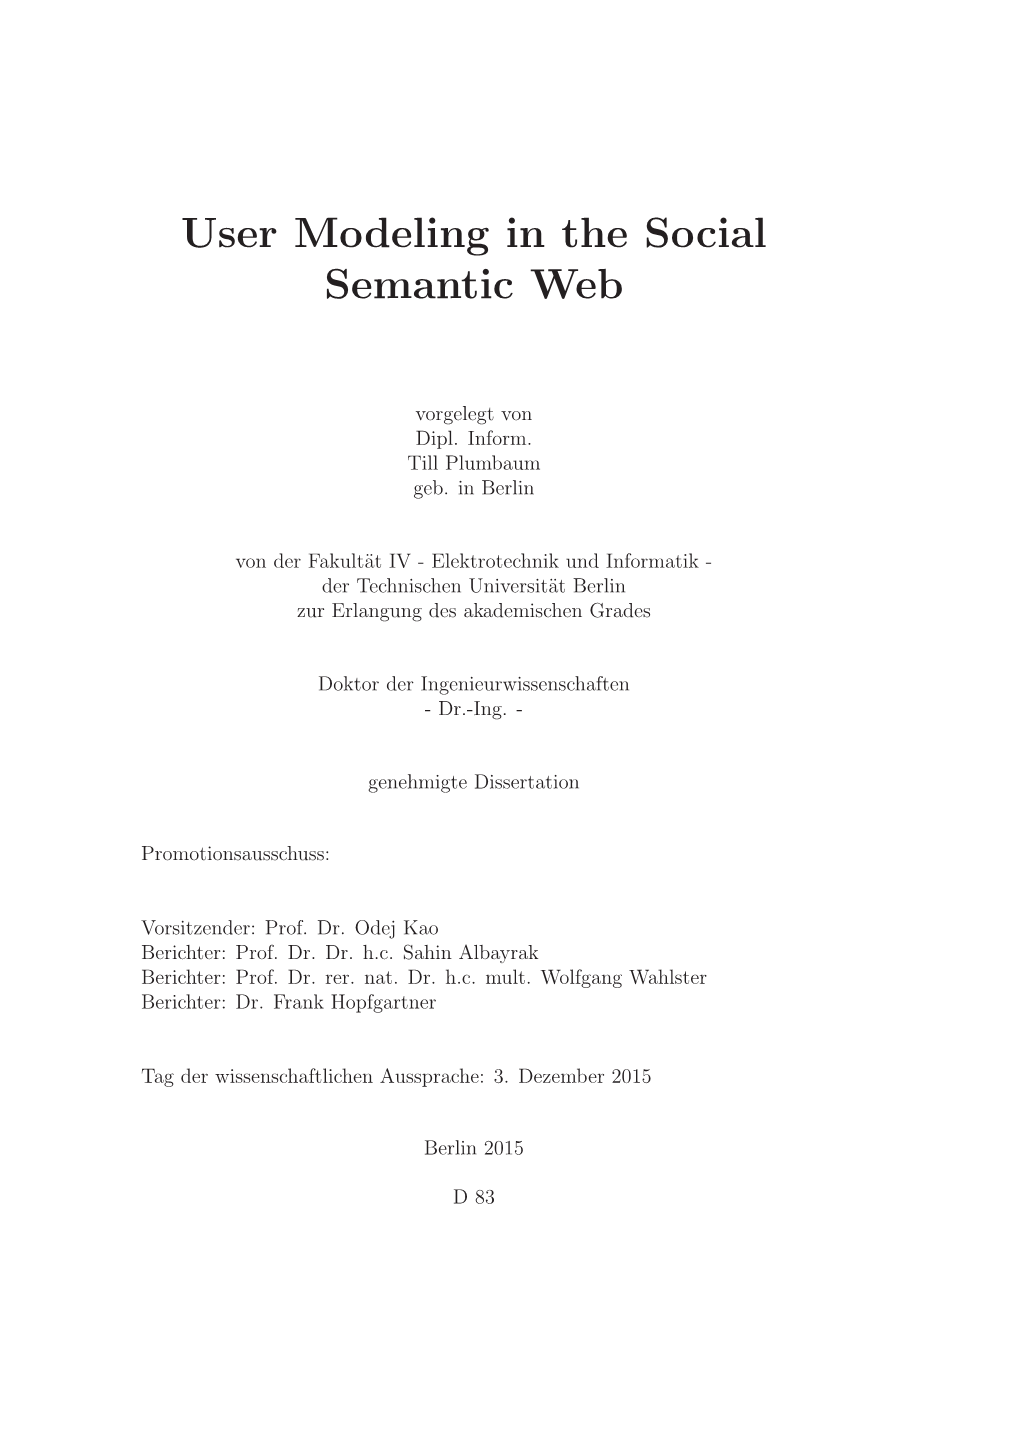 User Modeling in the Social Semantic Web